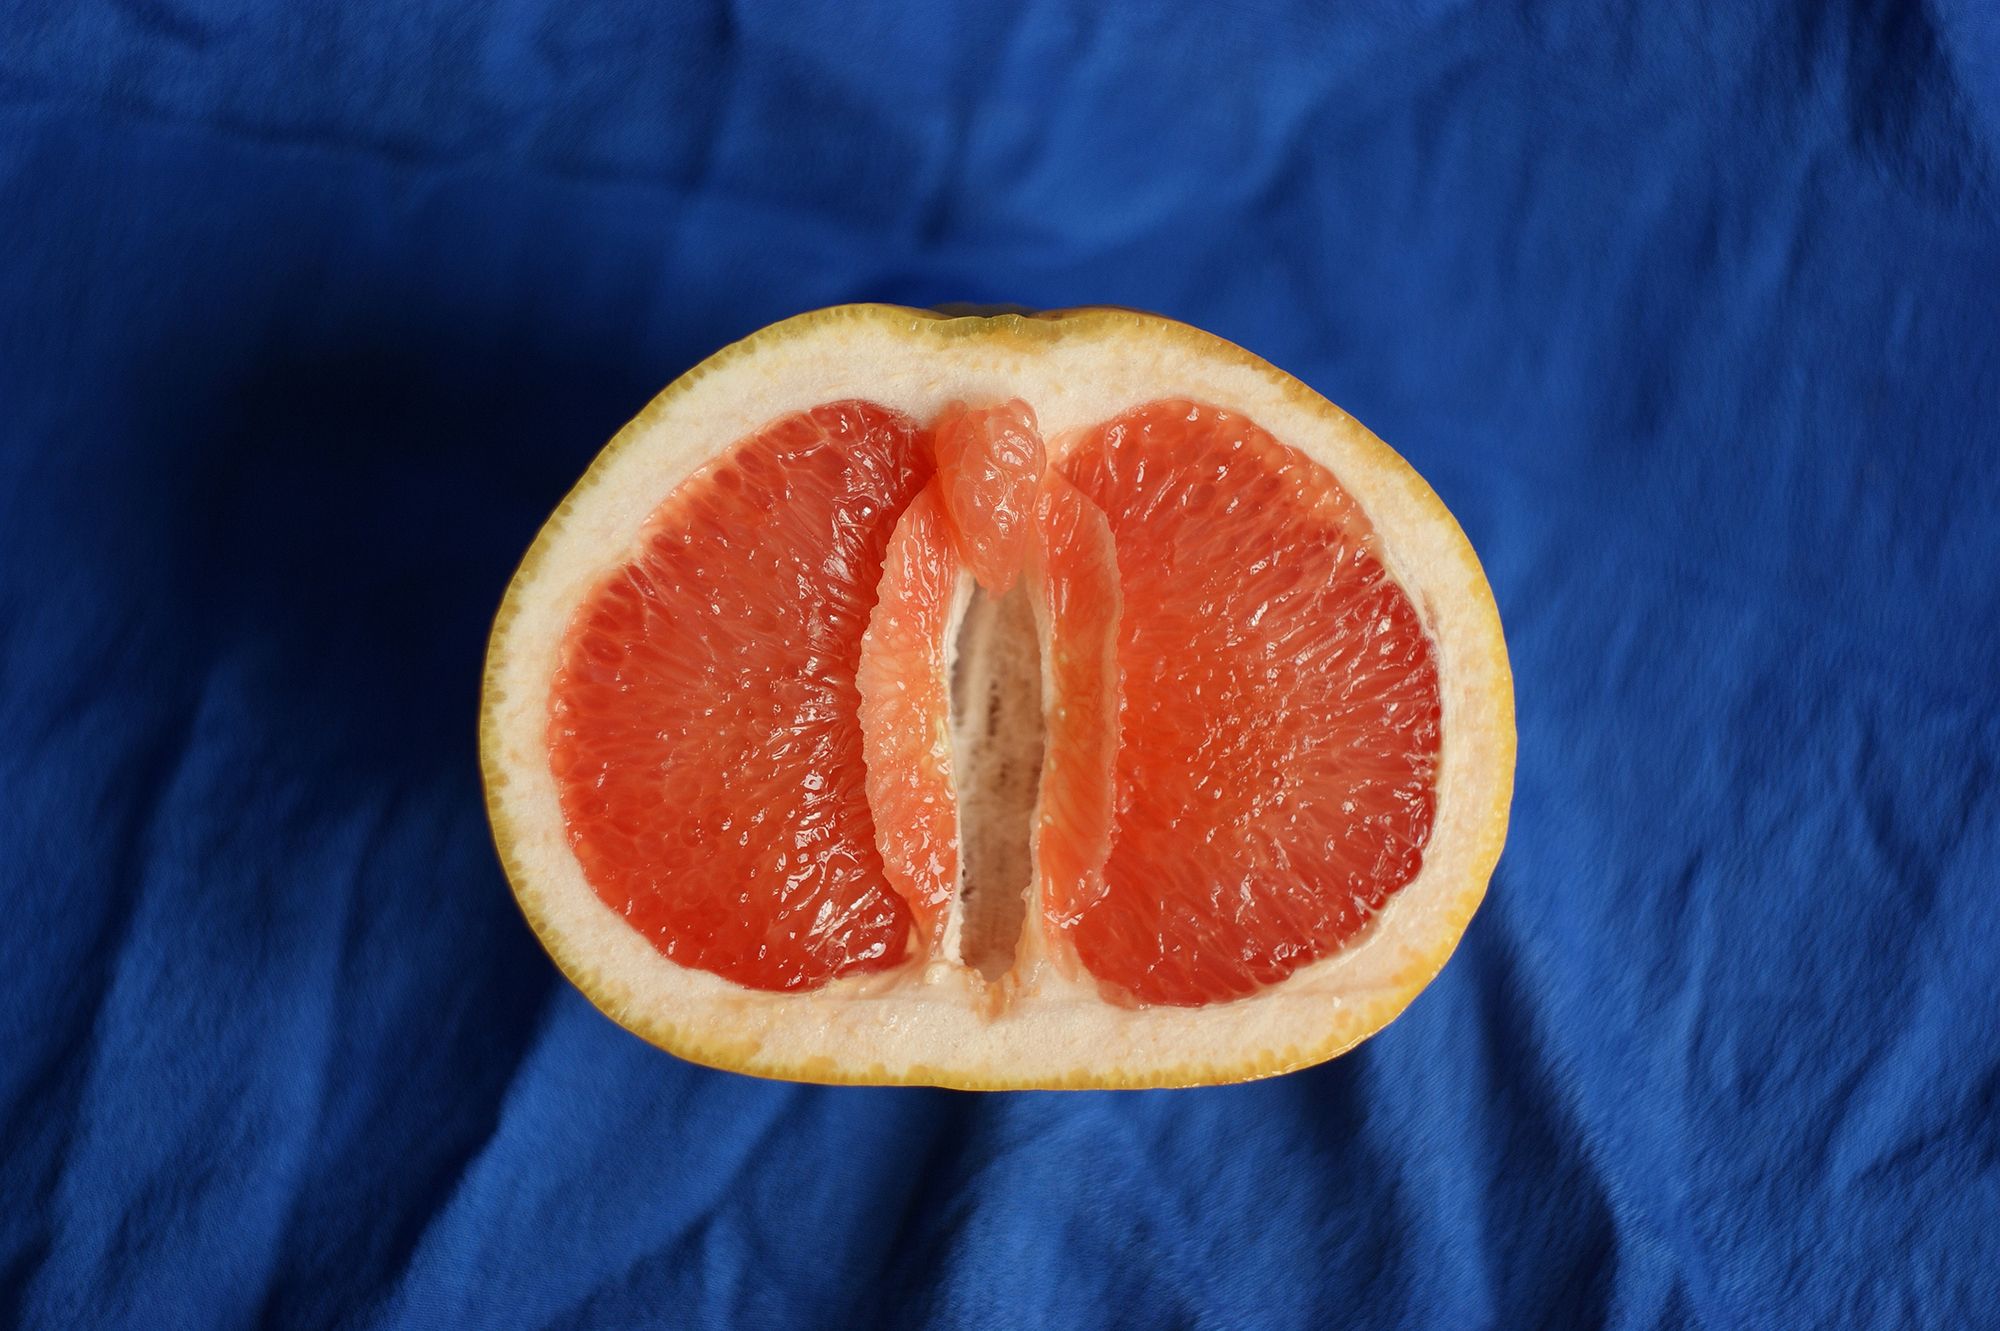 Halbe Orange als Symbol für Vagina und Klitoris